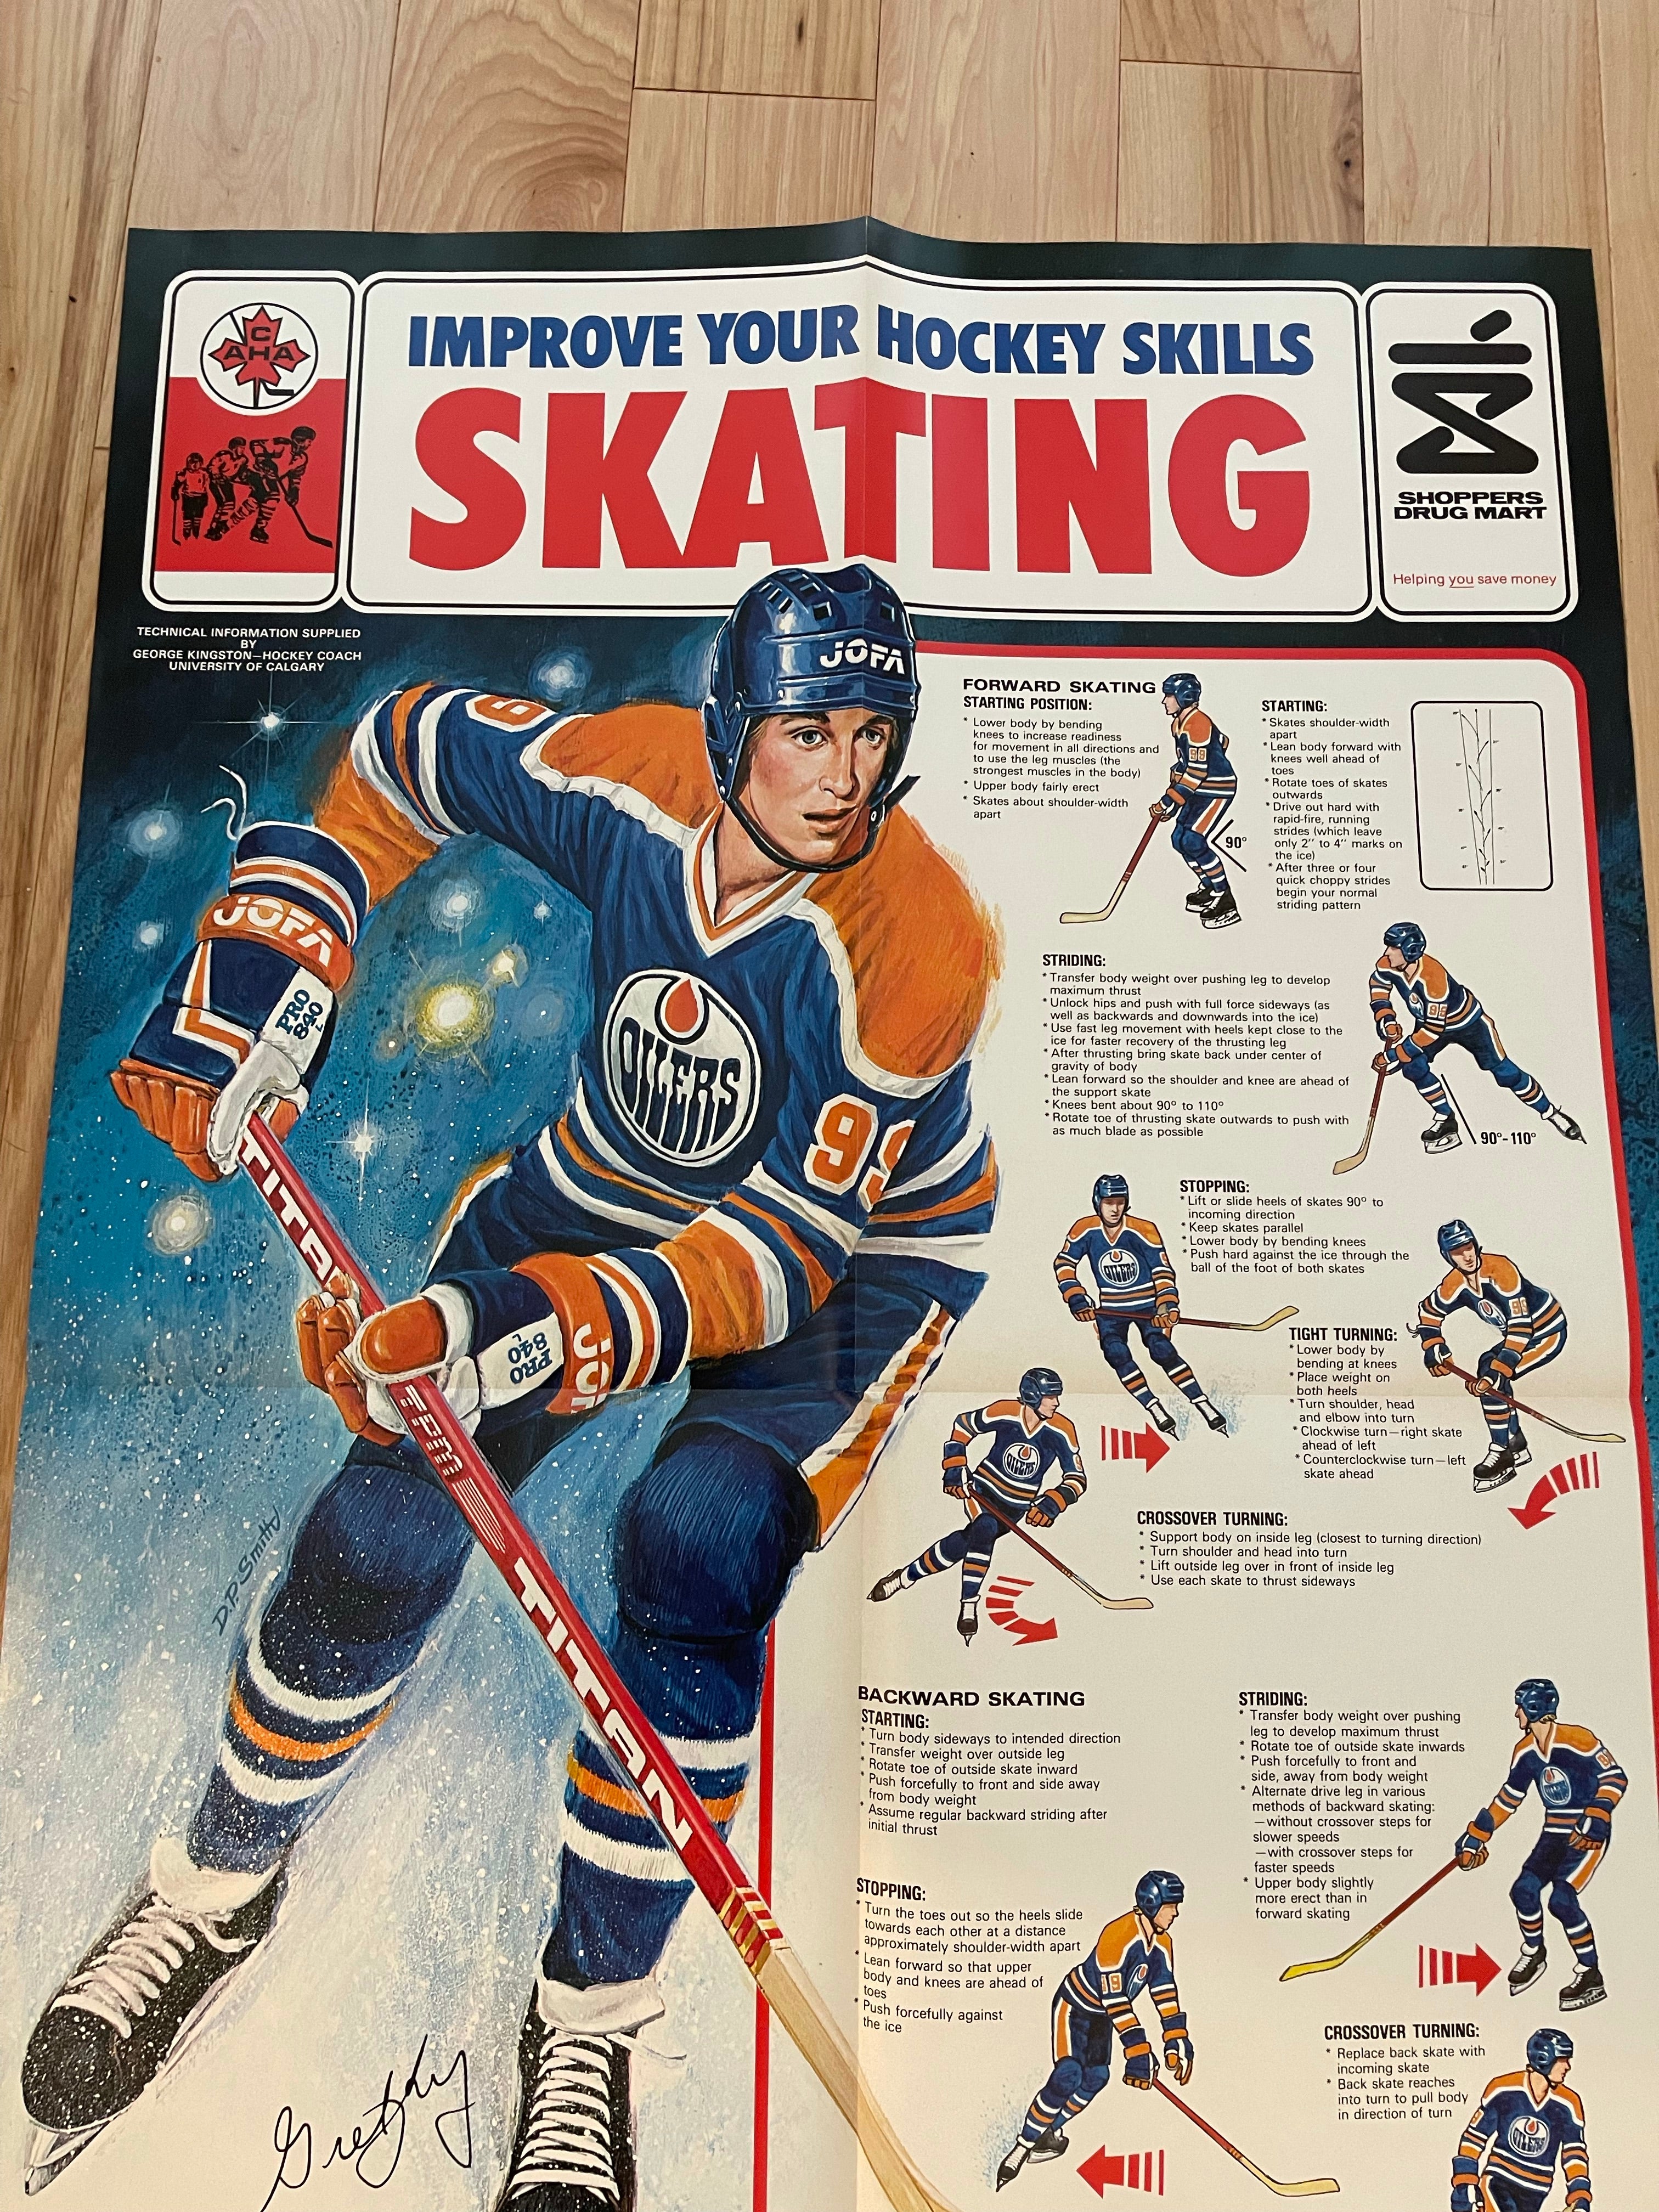 Wayne Gretzky Shoppers Drug Mart Hockey skills large poster 1981